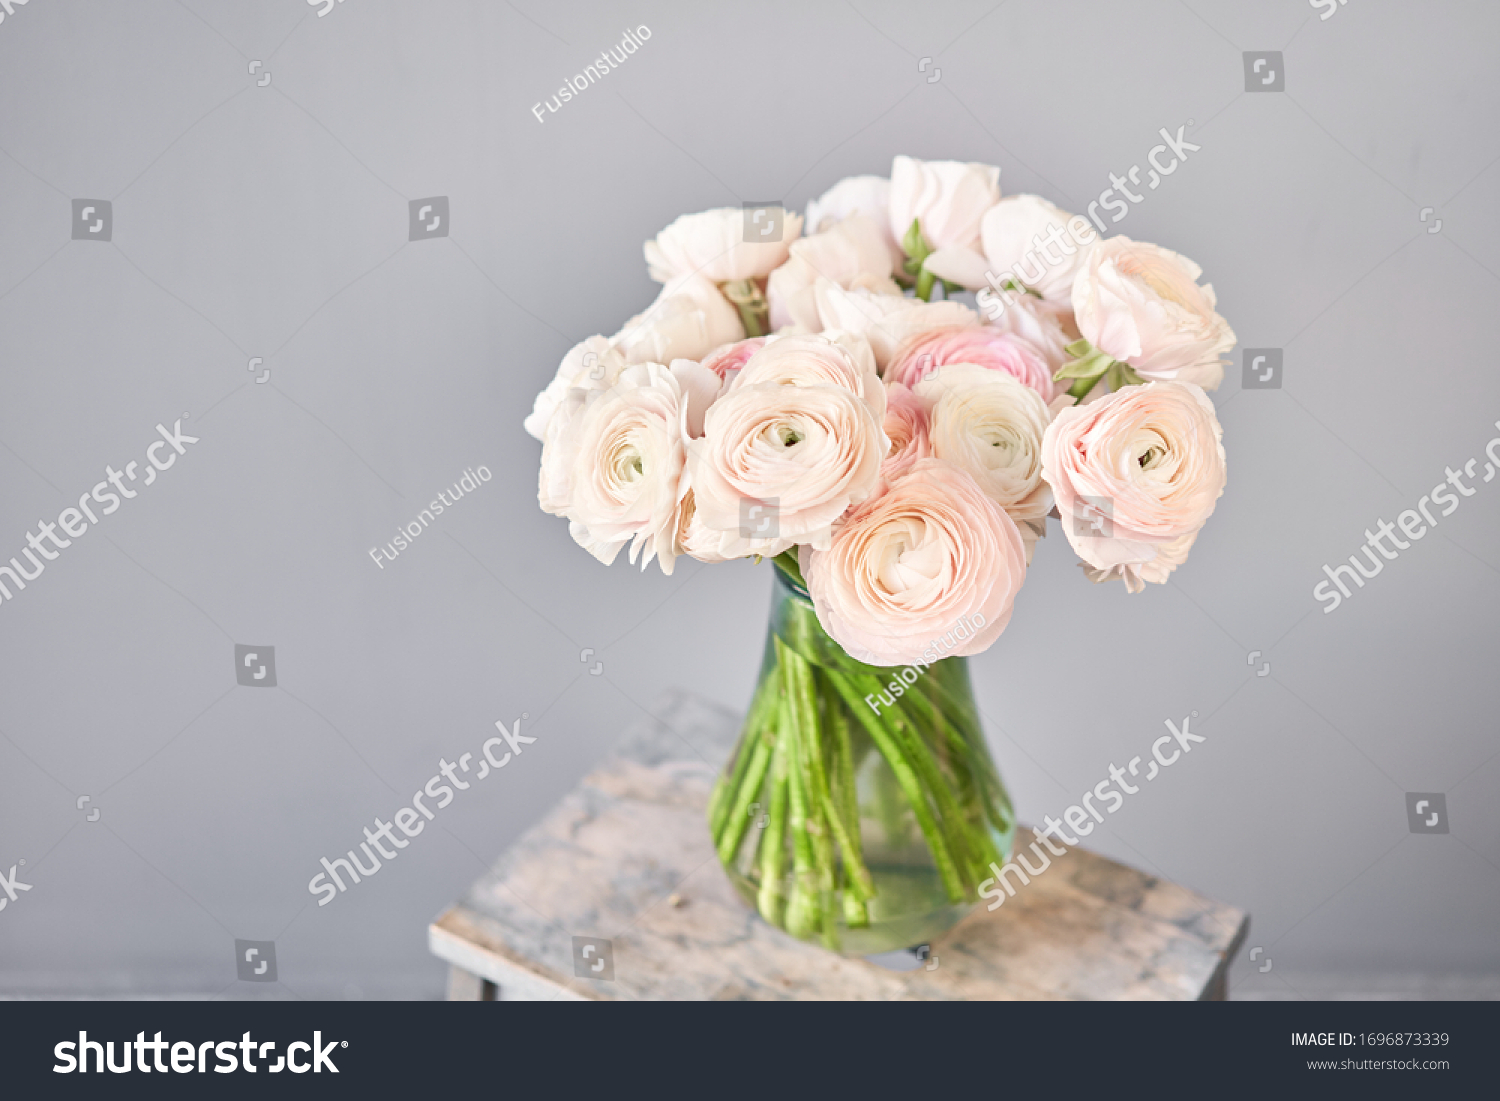 8,618 Ranunculus vase Stock Photos, Images & Photography | Shutterstock